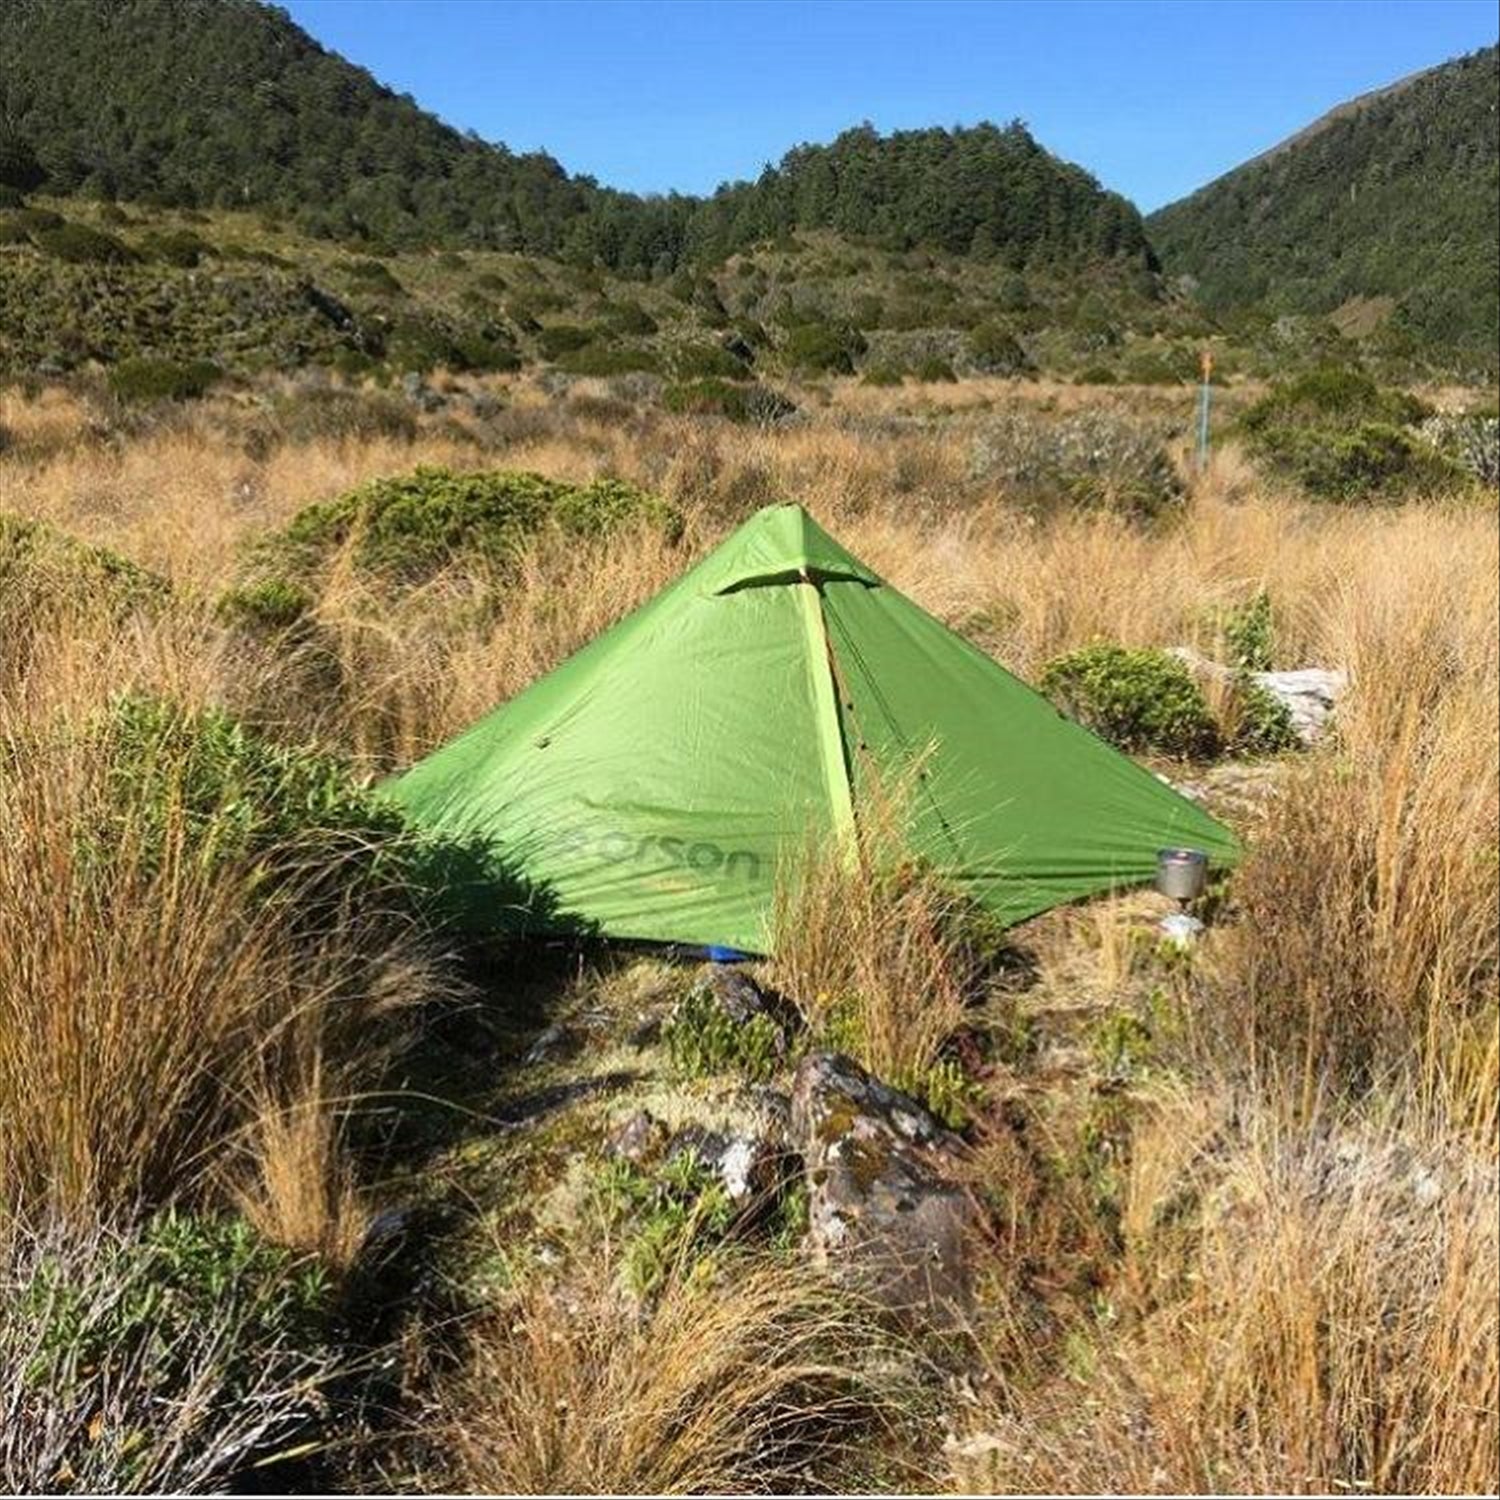 Indie 1 - Ultralight Silnylon 1 Person Hiking Tent, 1050g